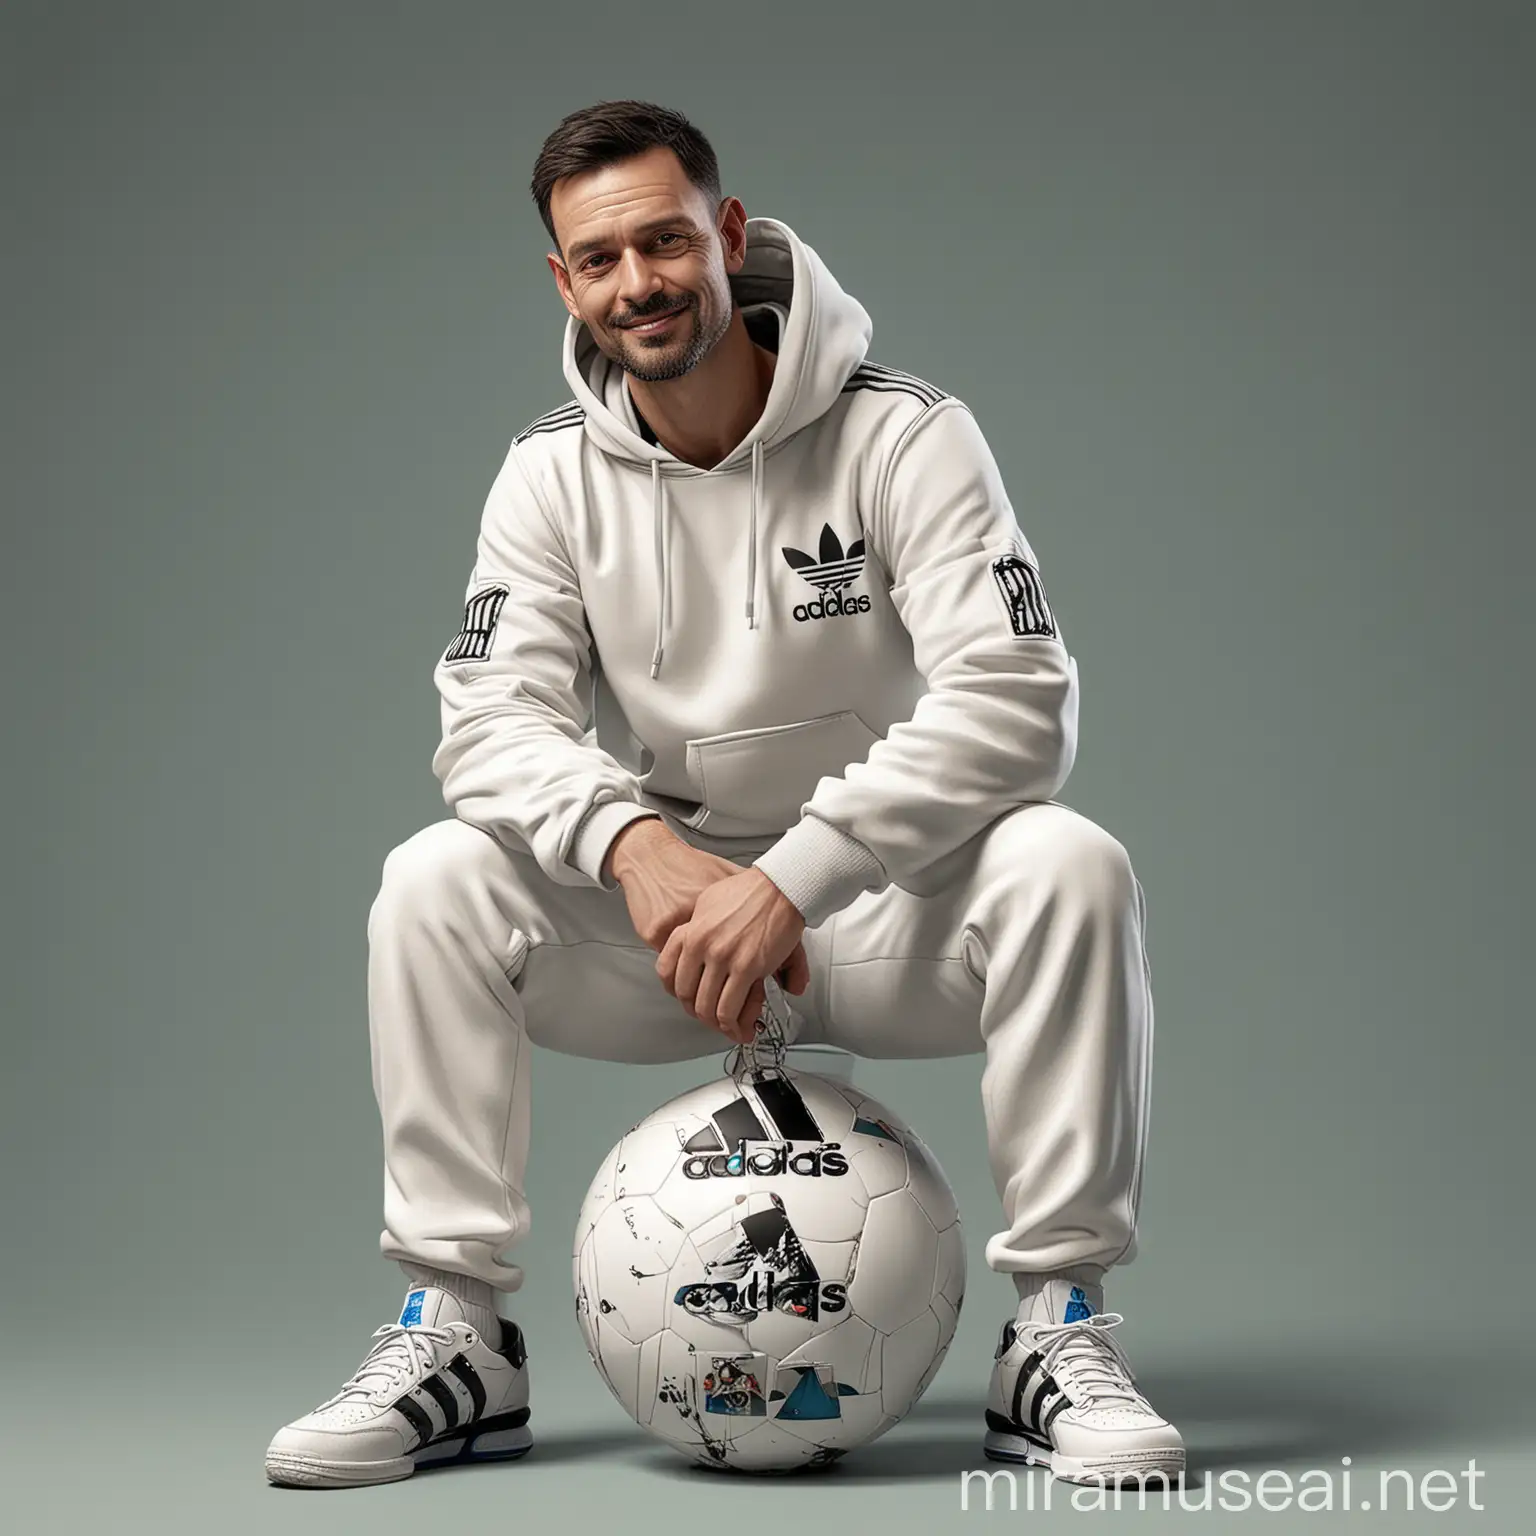 Realistic Caricature Man Sitting on Adidas Ball in Stadium